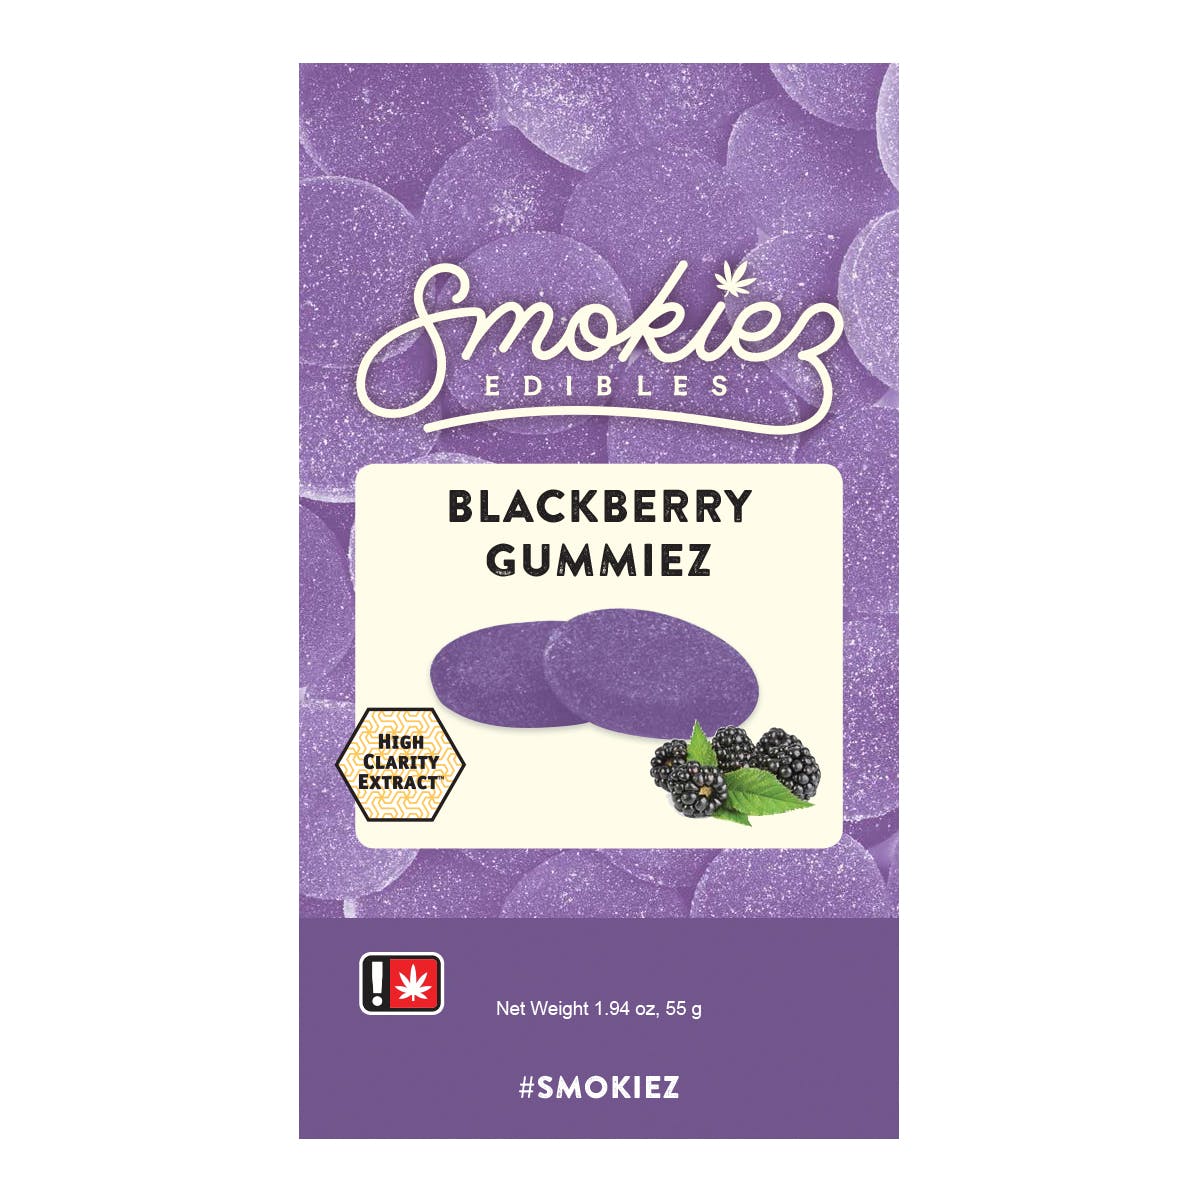 edible-smokiez-edibles-blackberry-gummiez-2c-50-mg